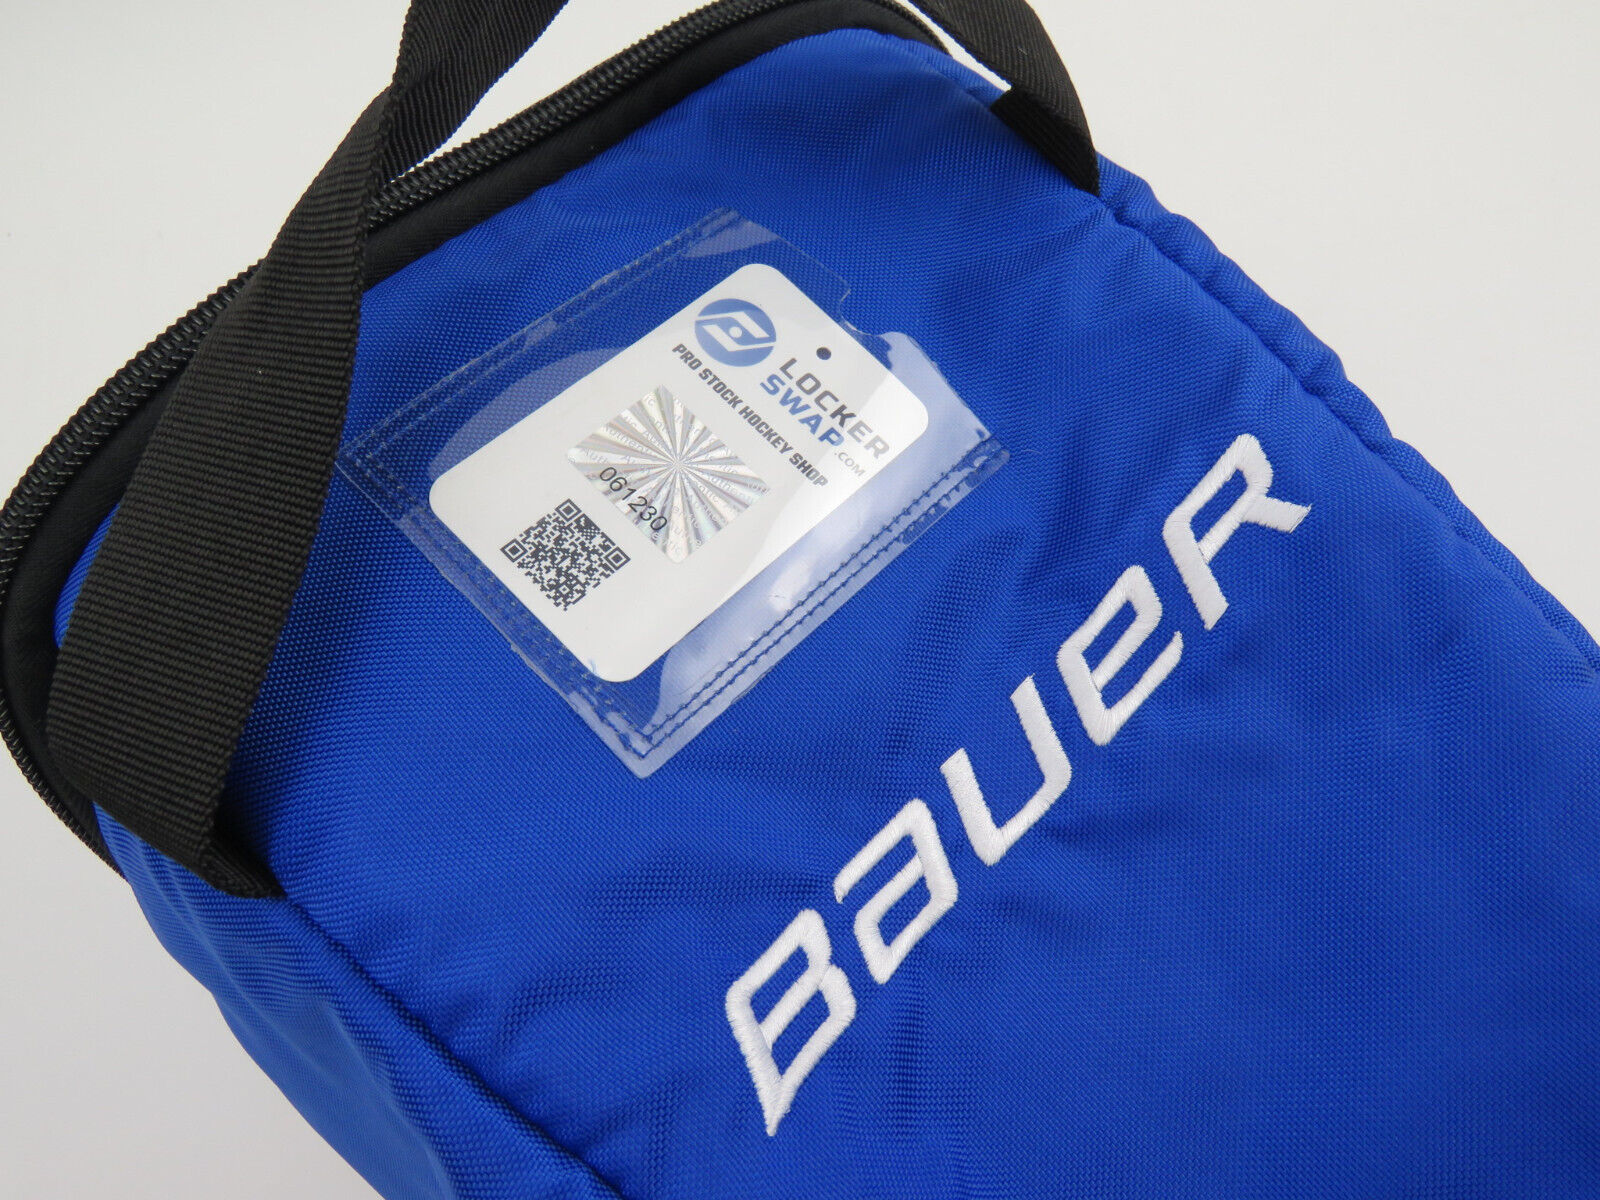 Bauer NHL Pro Stock Team Issued Hockey Equipment GOALIE Helmet Mask Bag Leafs